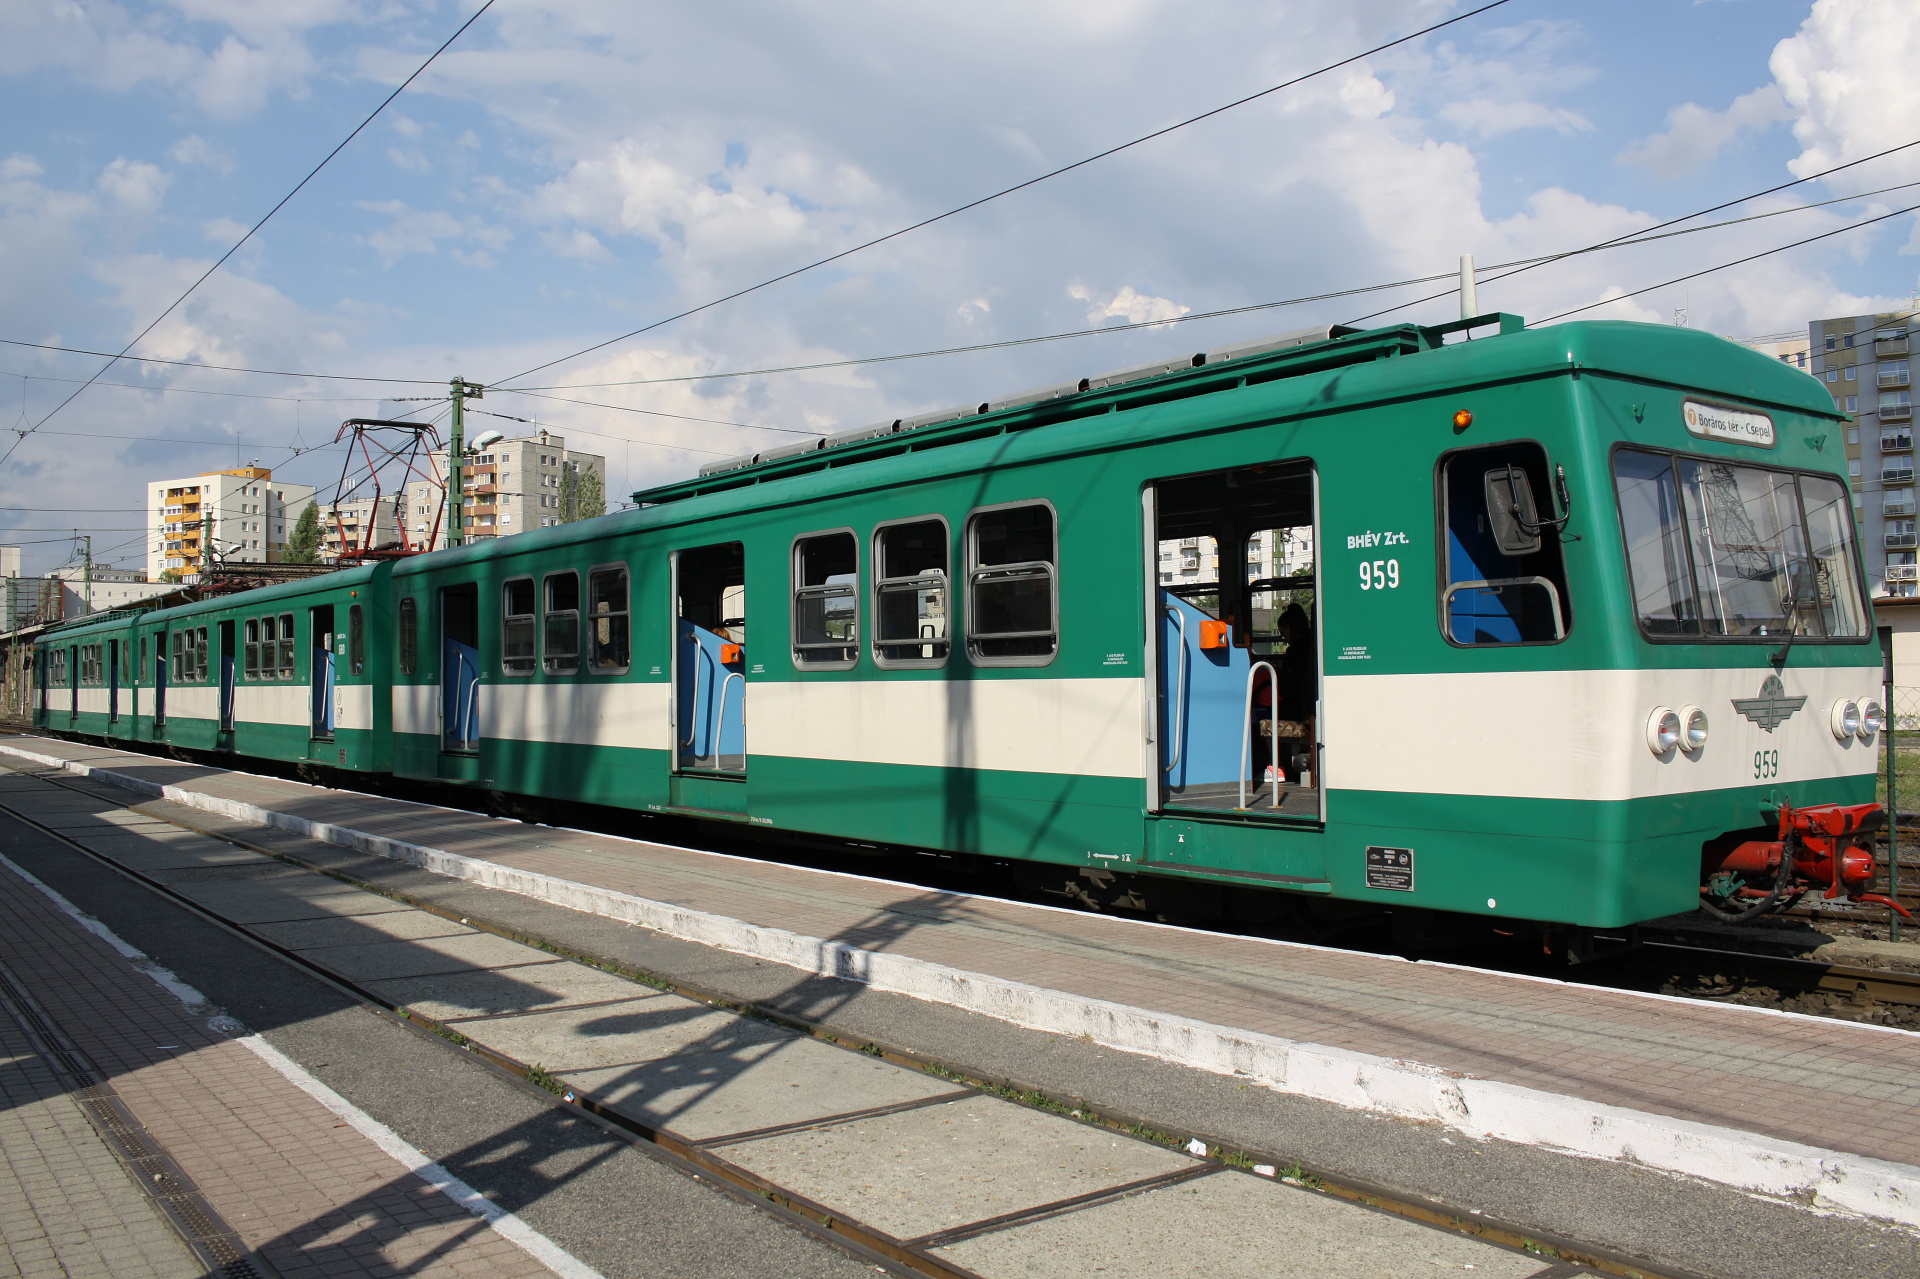 VEB LEW MXA 959 (Travels » Budapest » Vehicles » Trains and Locomotives)